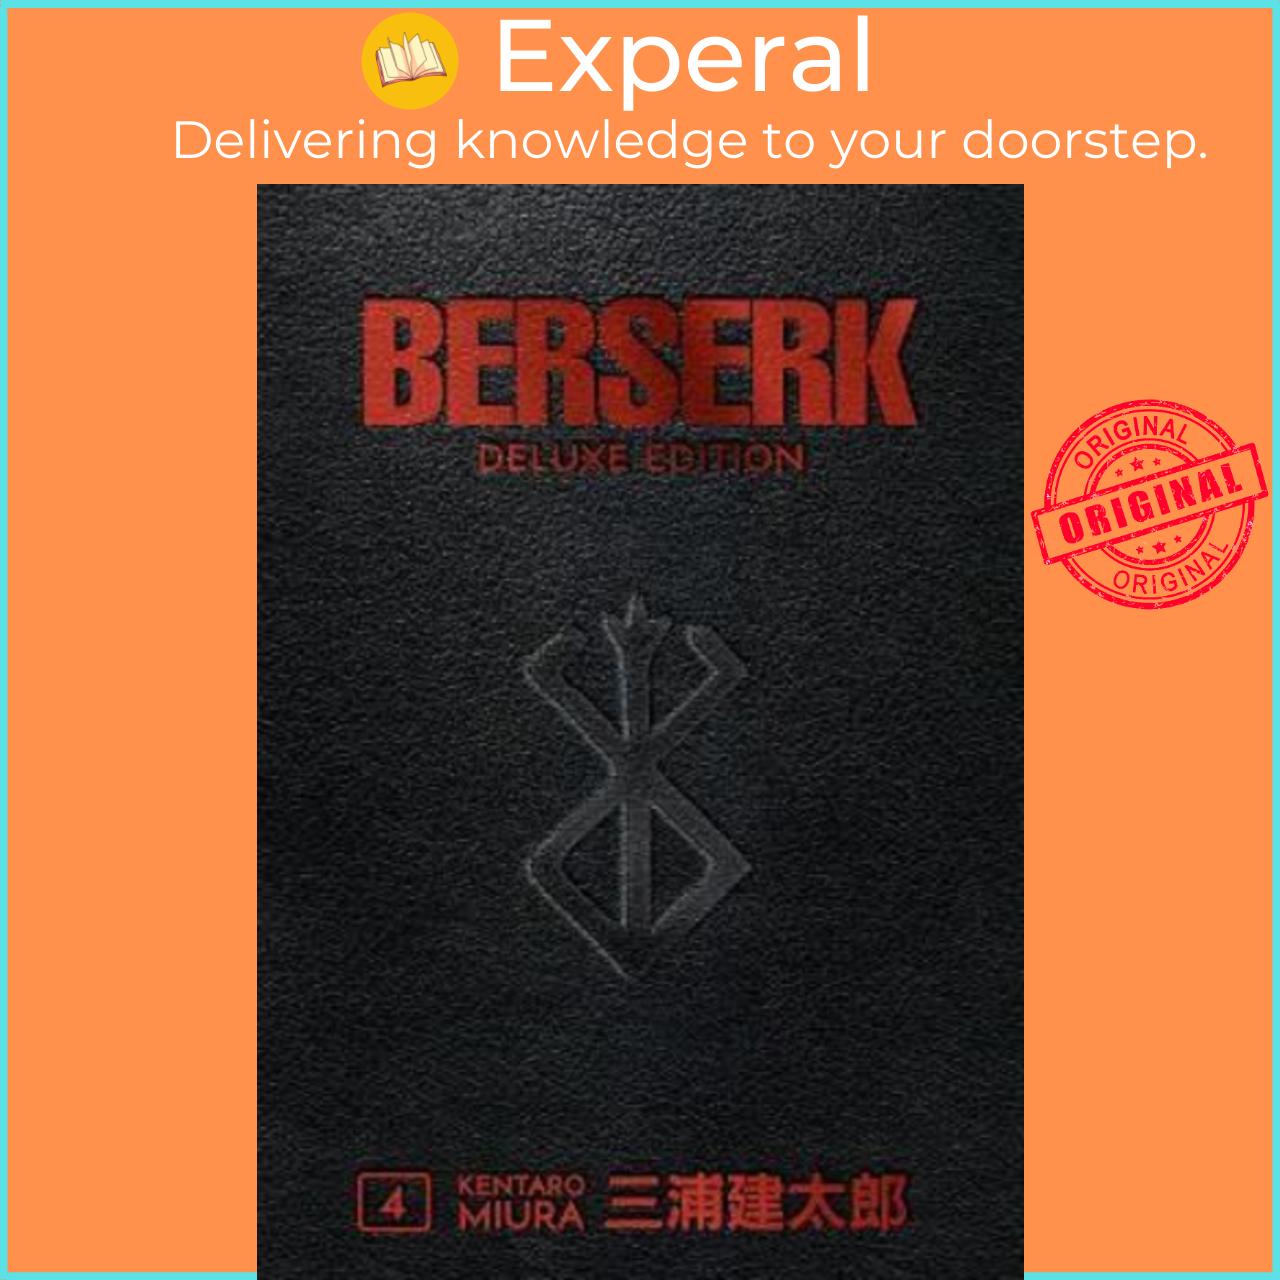 Sách - Berserk Deluxe Volume 4 by Kentaro Miura (US edition, hardcover)